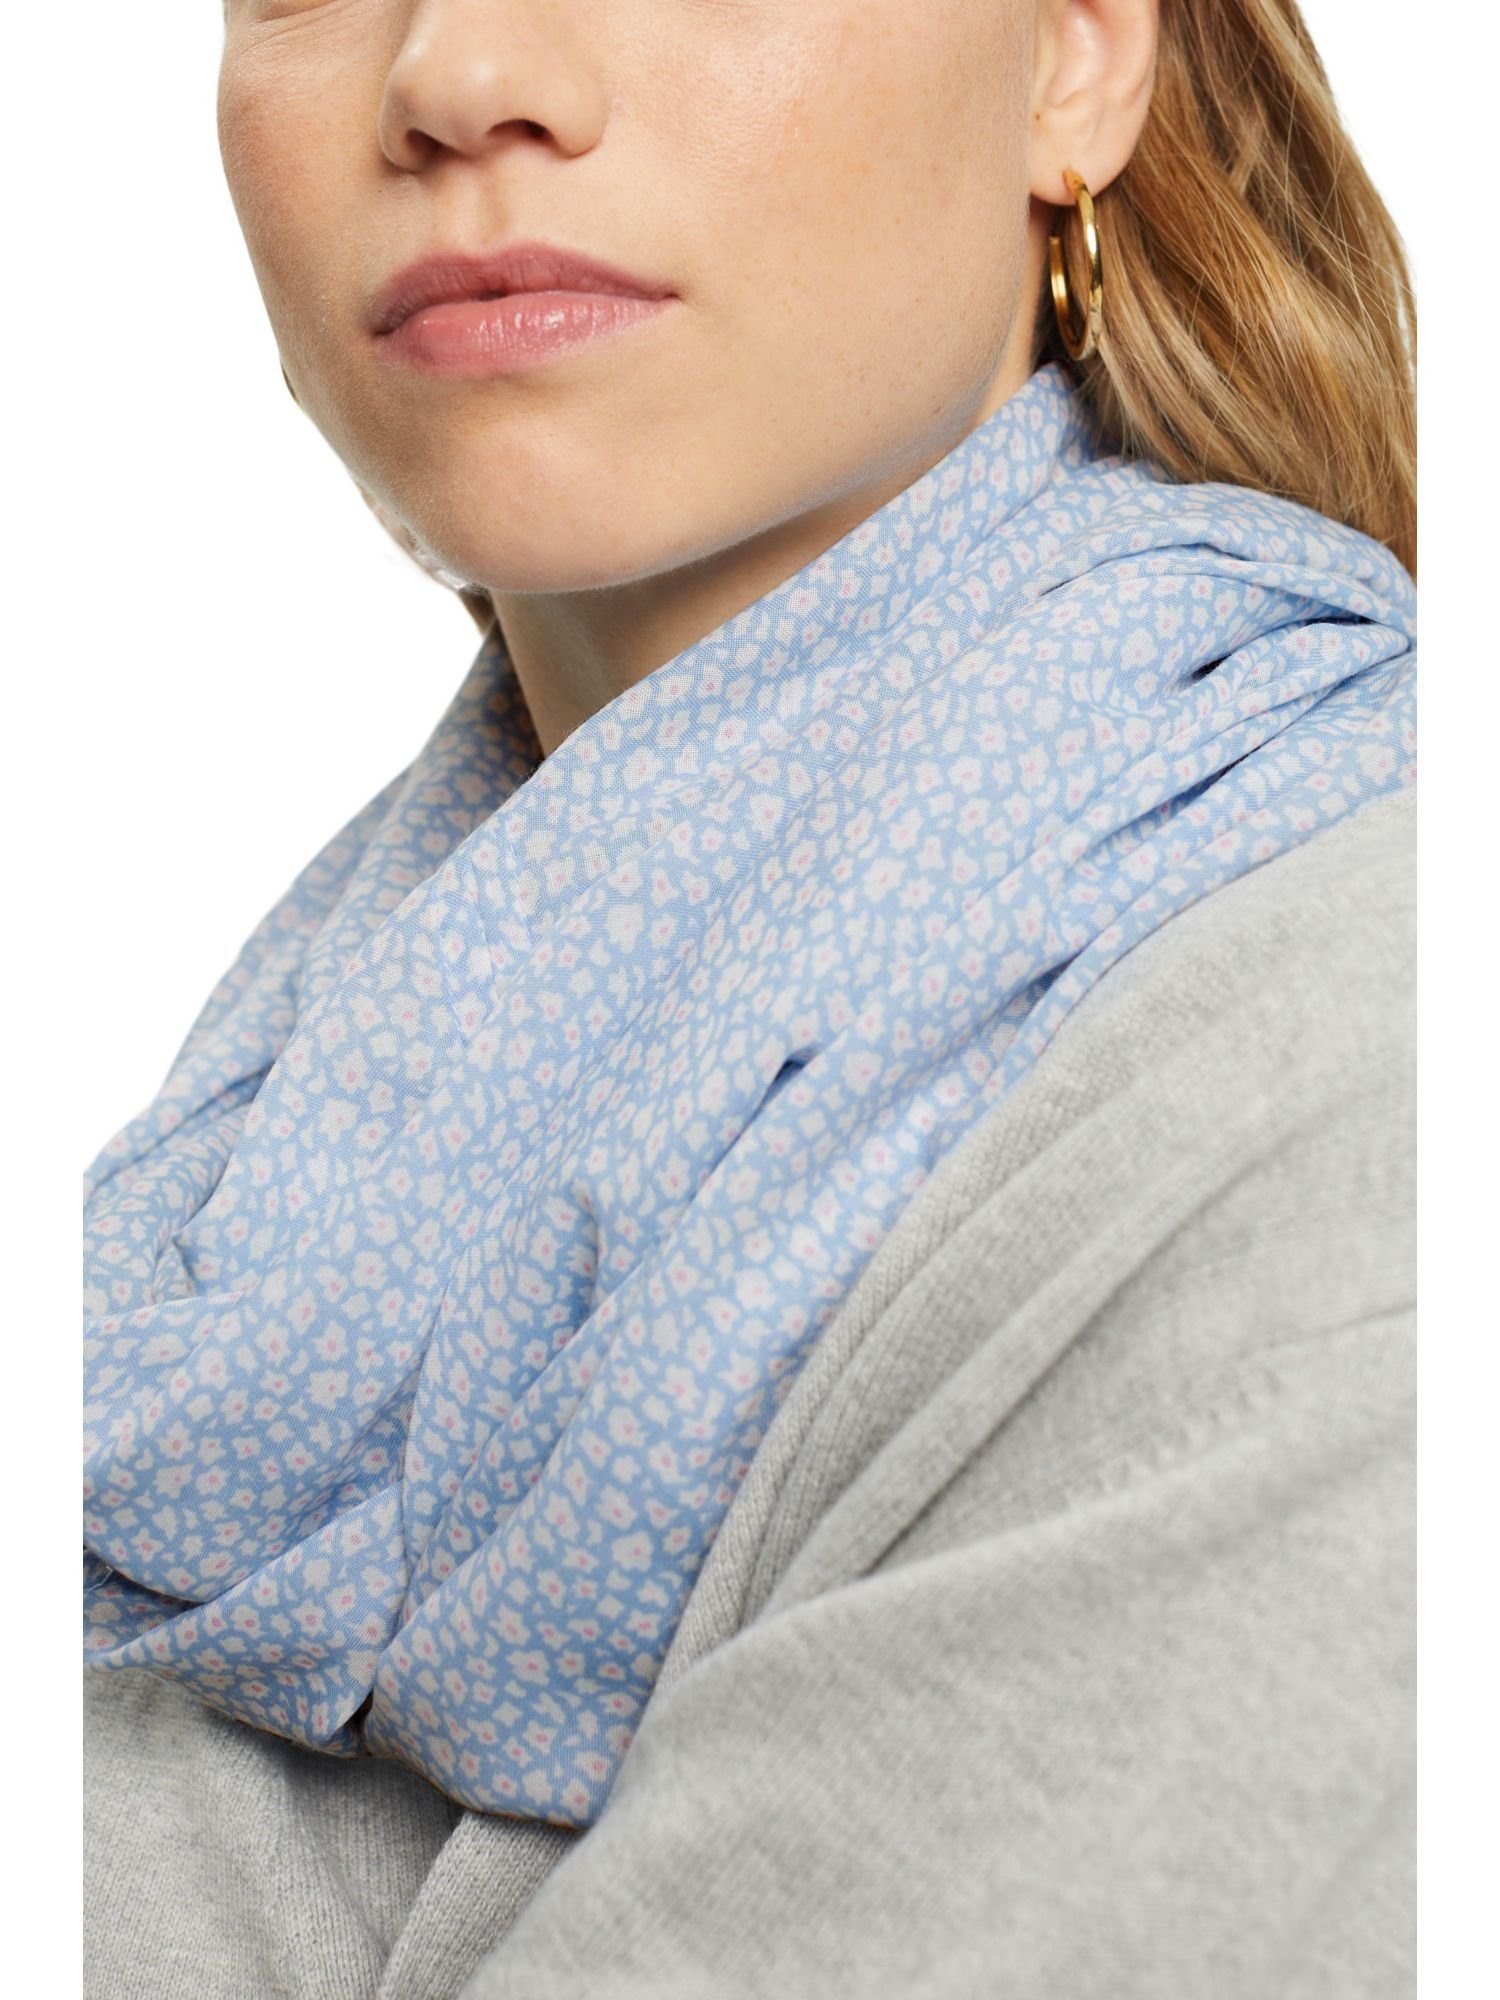 Esprit Modeschal Loop-Schal mit Blumen-Muster PASTEL BLUE